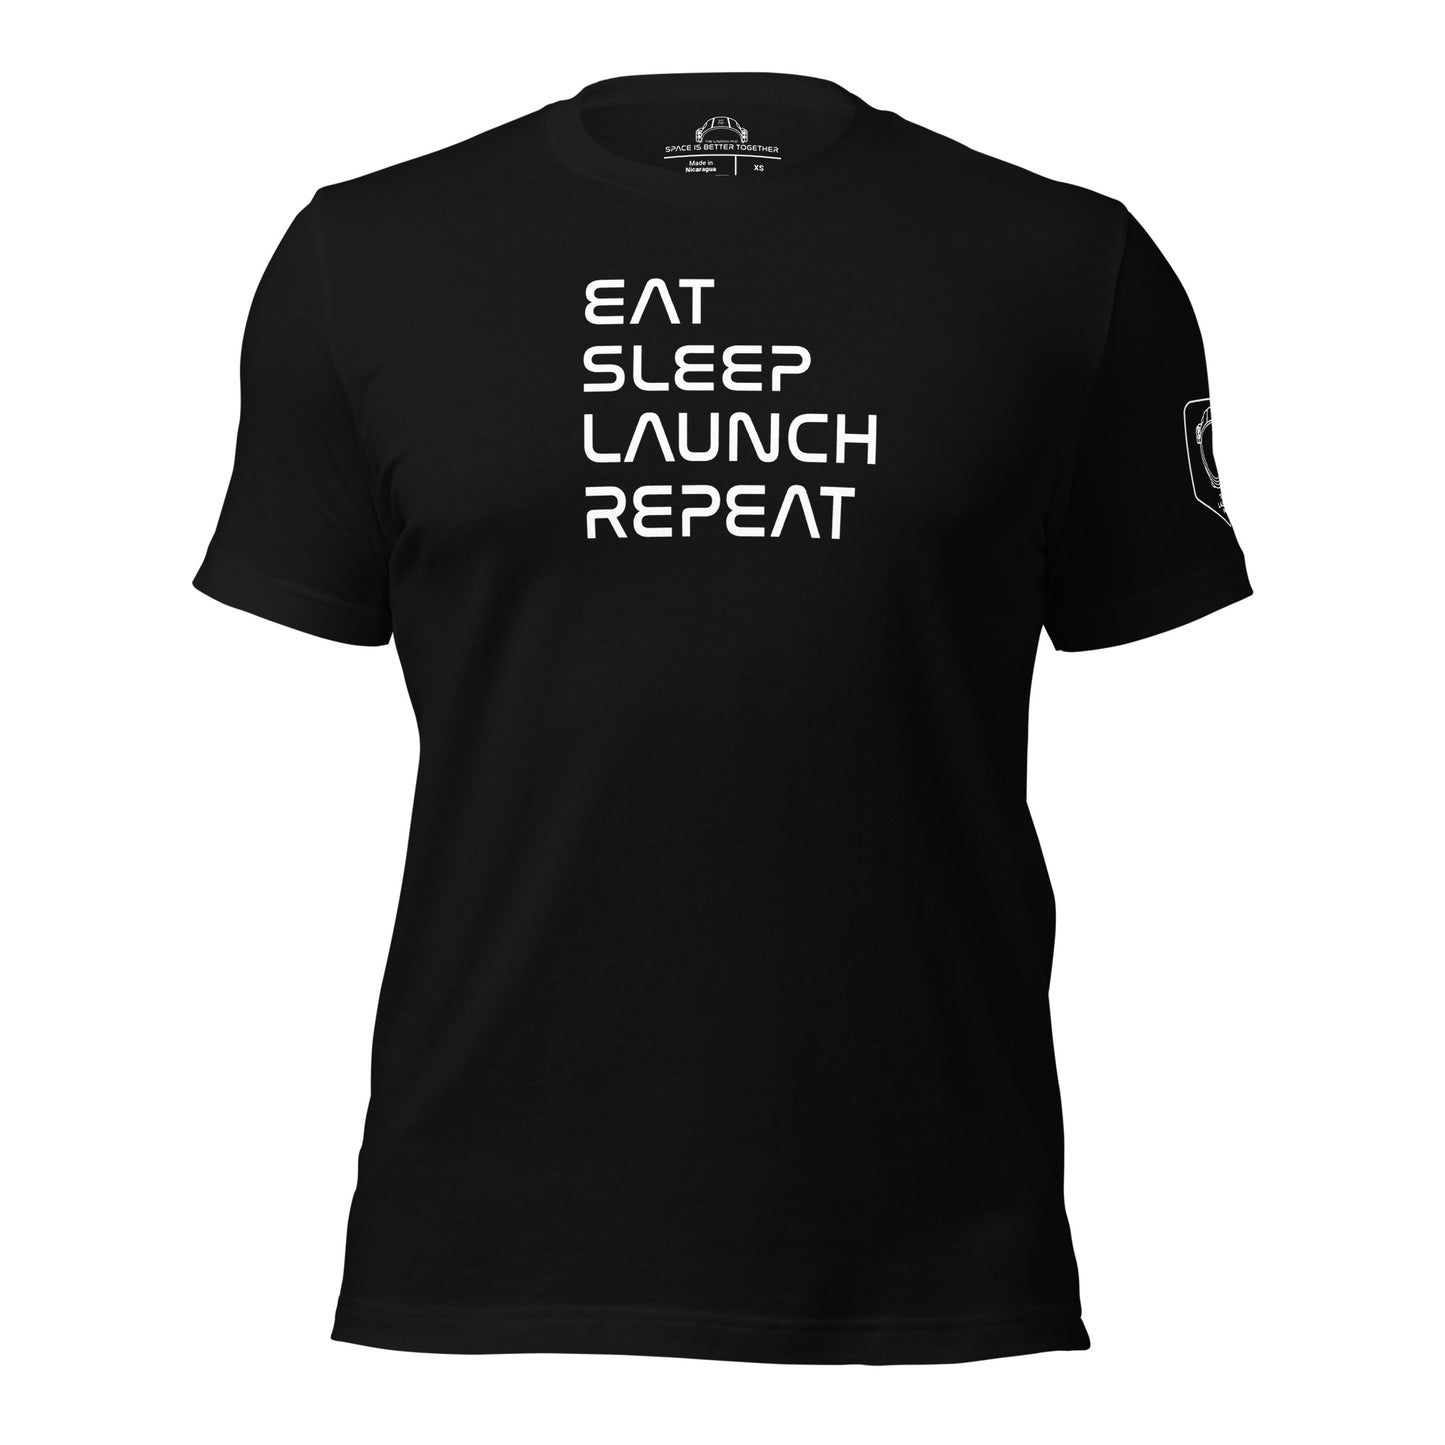 Eat, Sleep, Launch, Repeat Tee